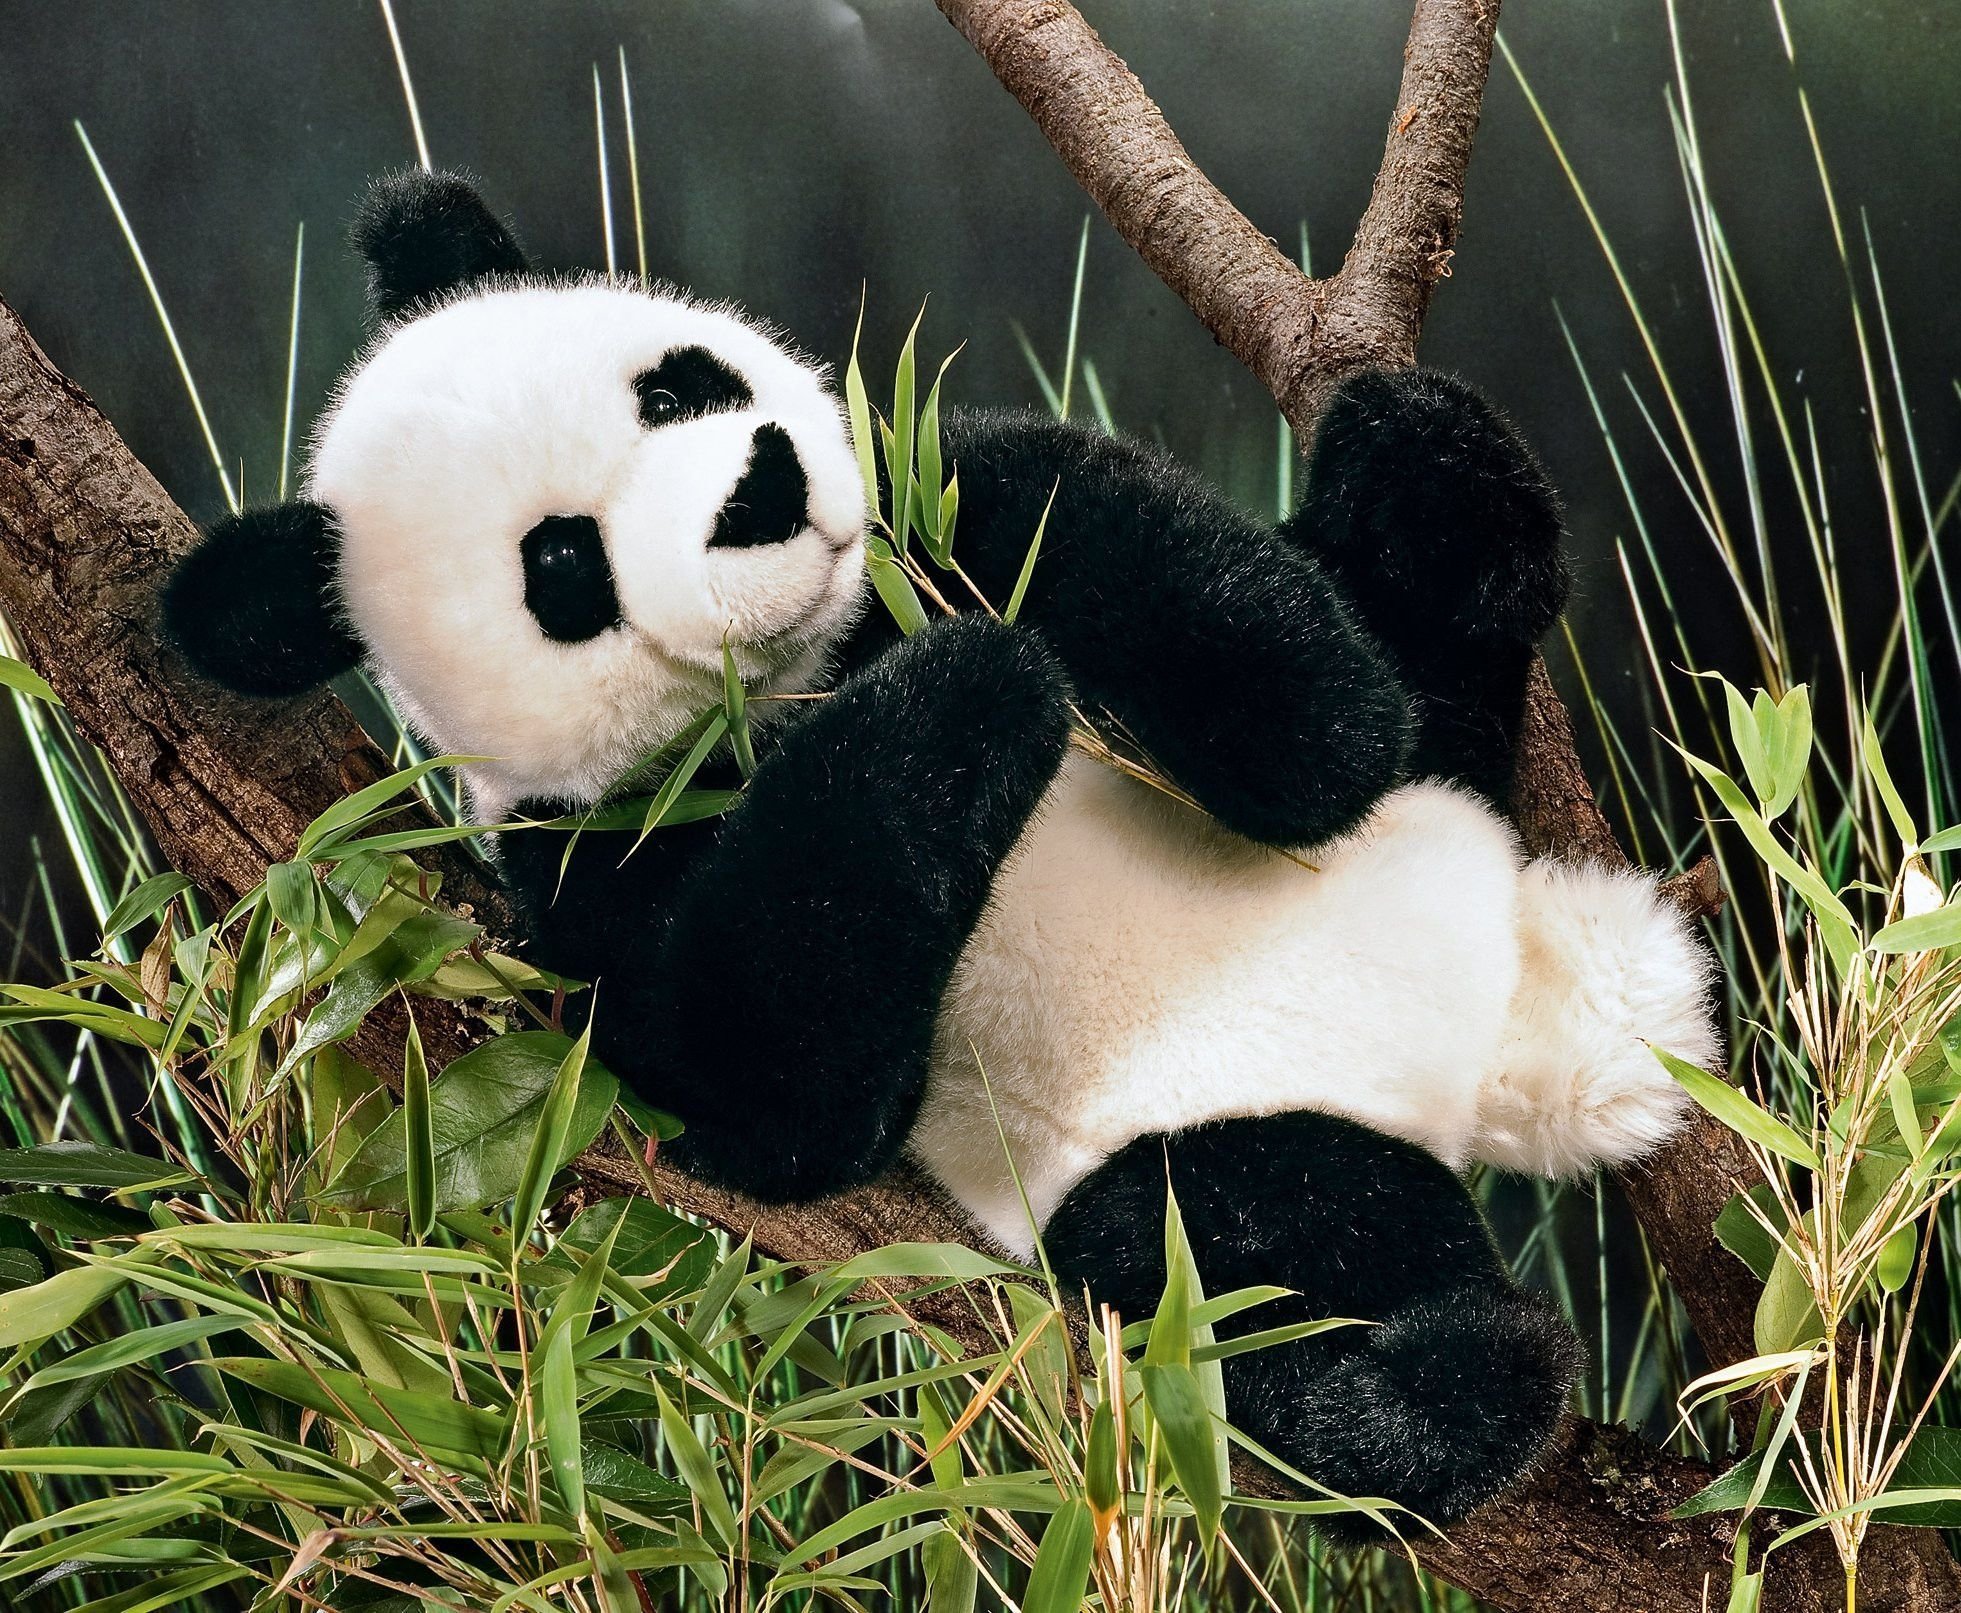 Buy panda. Декоративная Панда Живая. Панда Живая маленькая. Маленькая Живая Пандочка. Панда в живой природе.